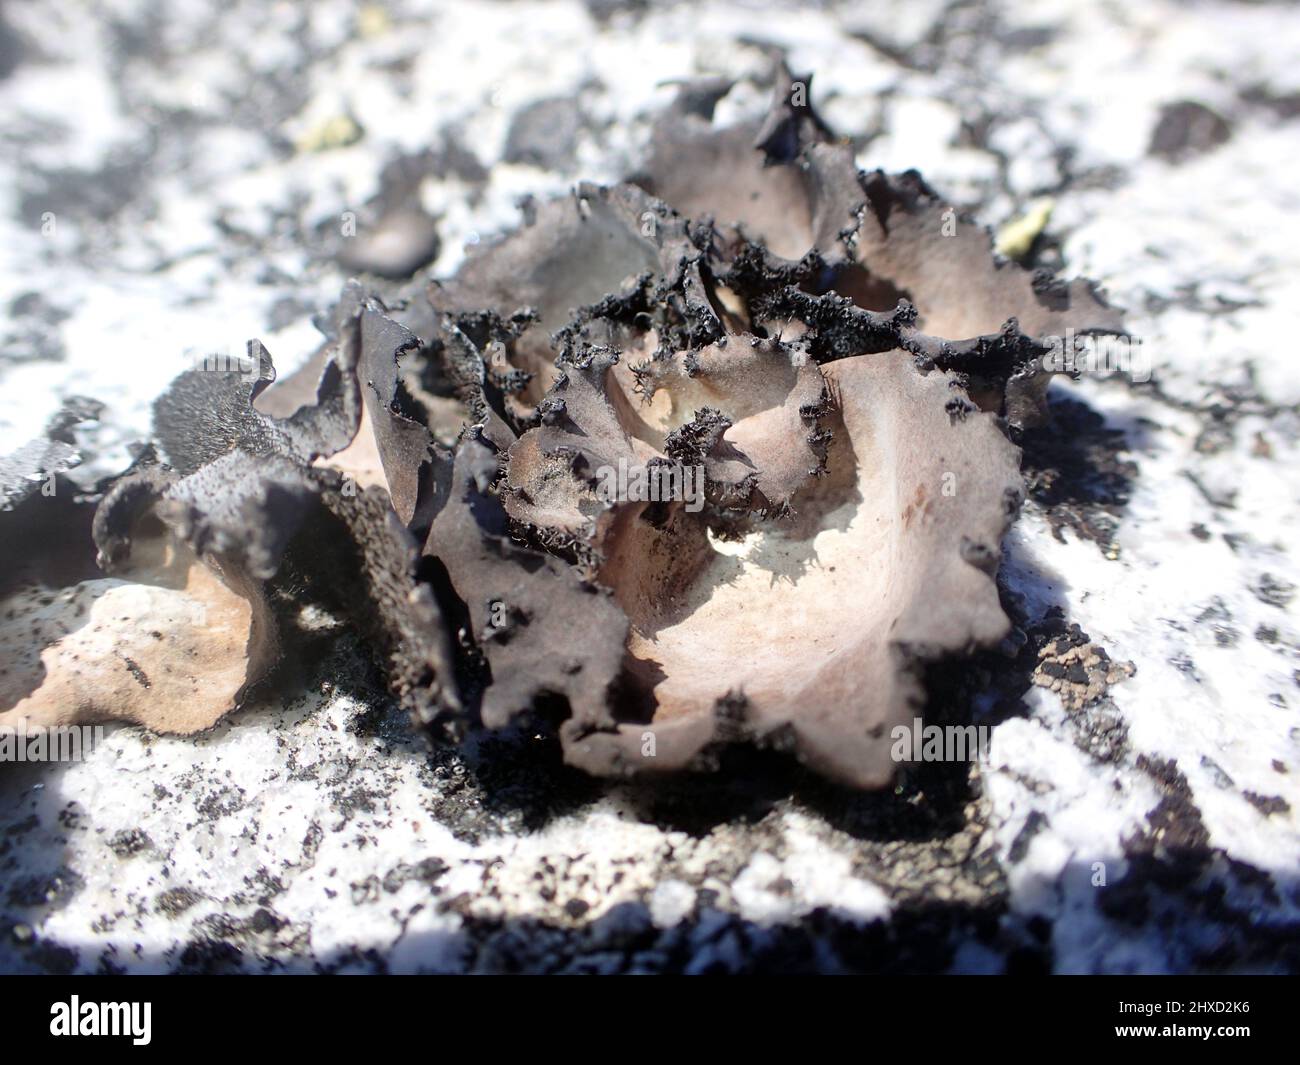 Foliose lichen Umbilicaria aprina on rock on Cormorant Island, Arthur Harbor, Antarctica Stock Photo